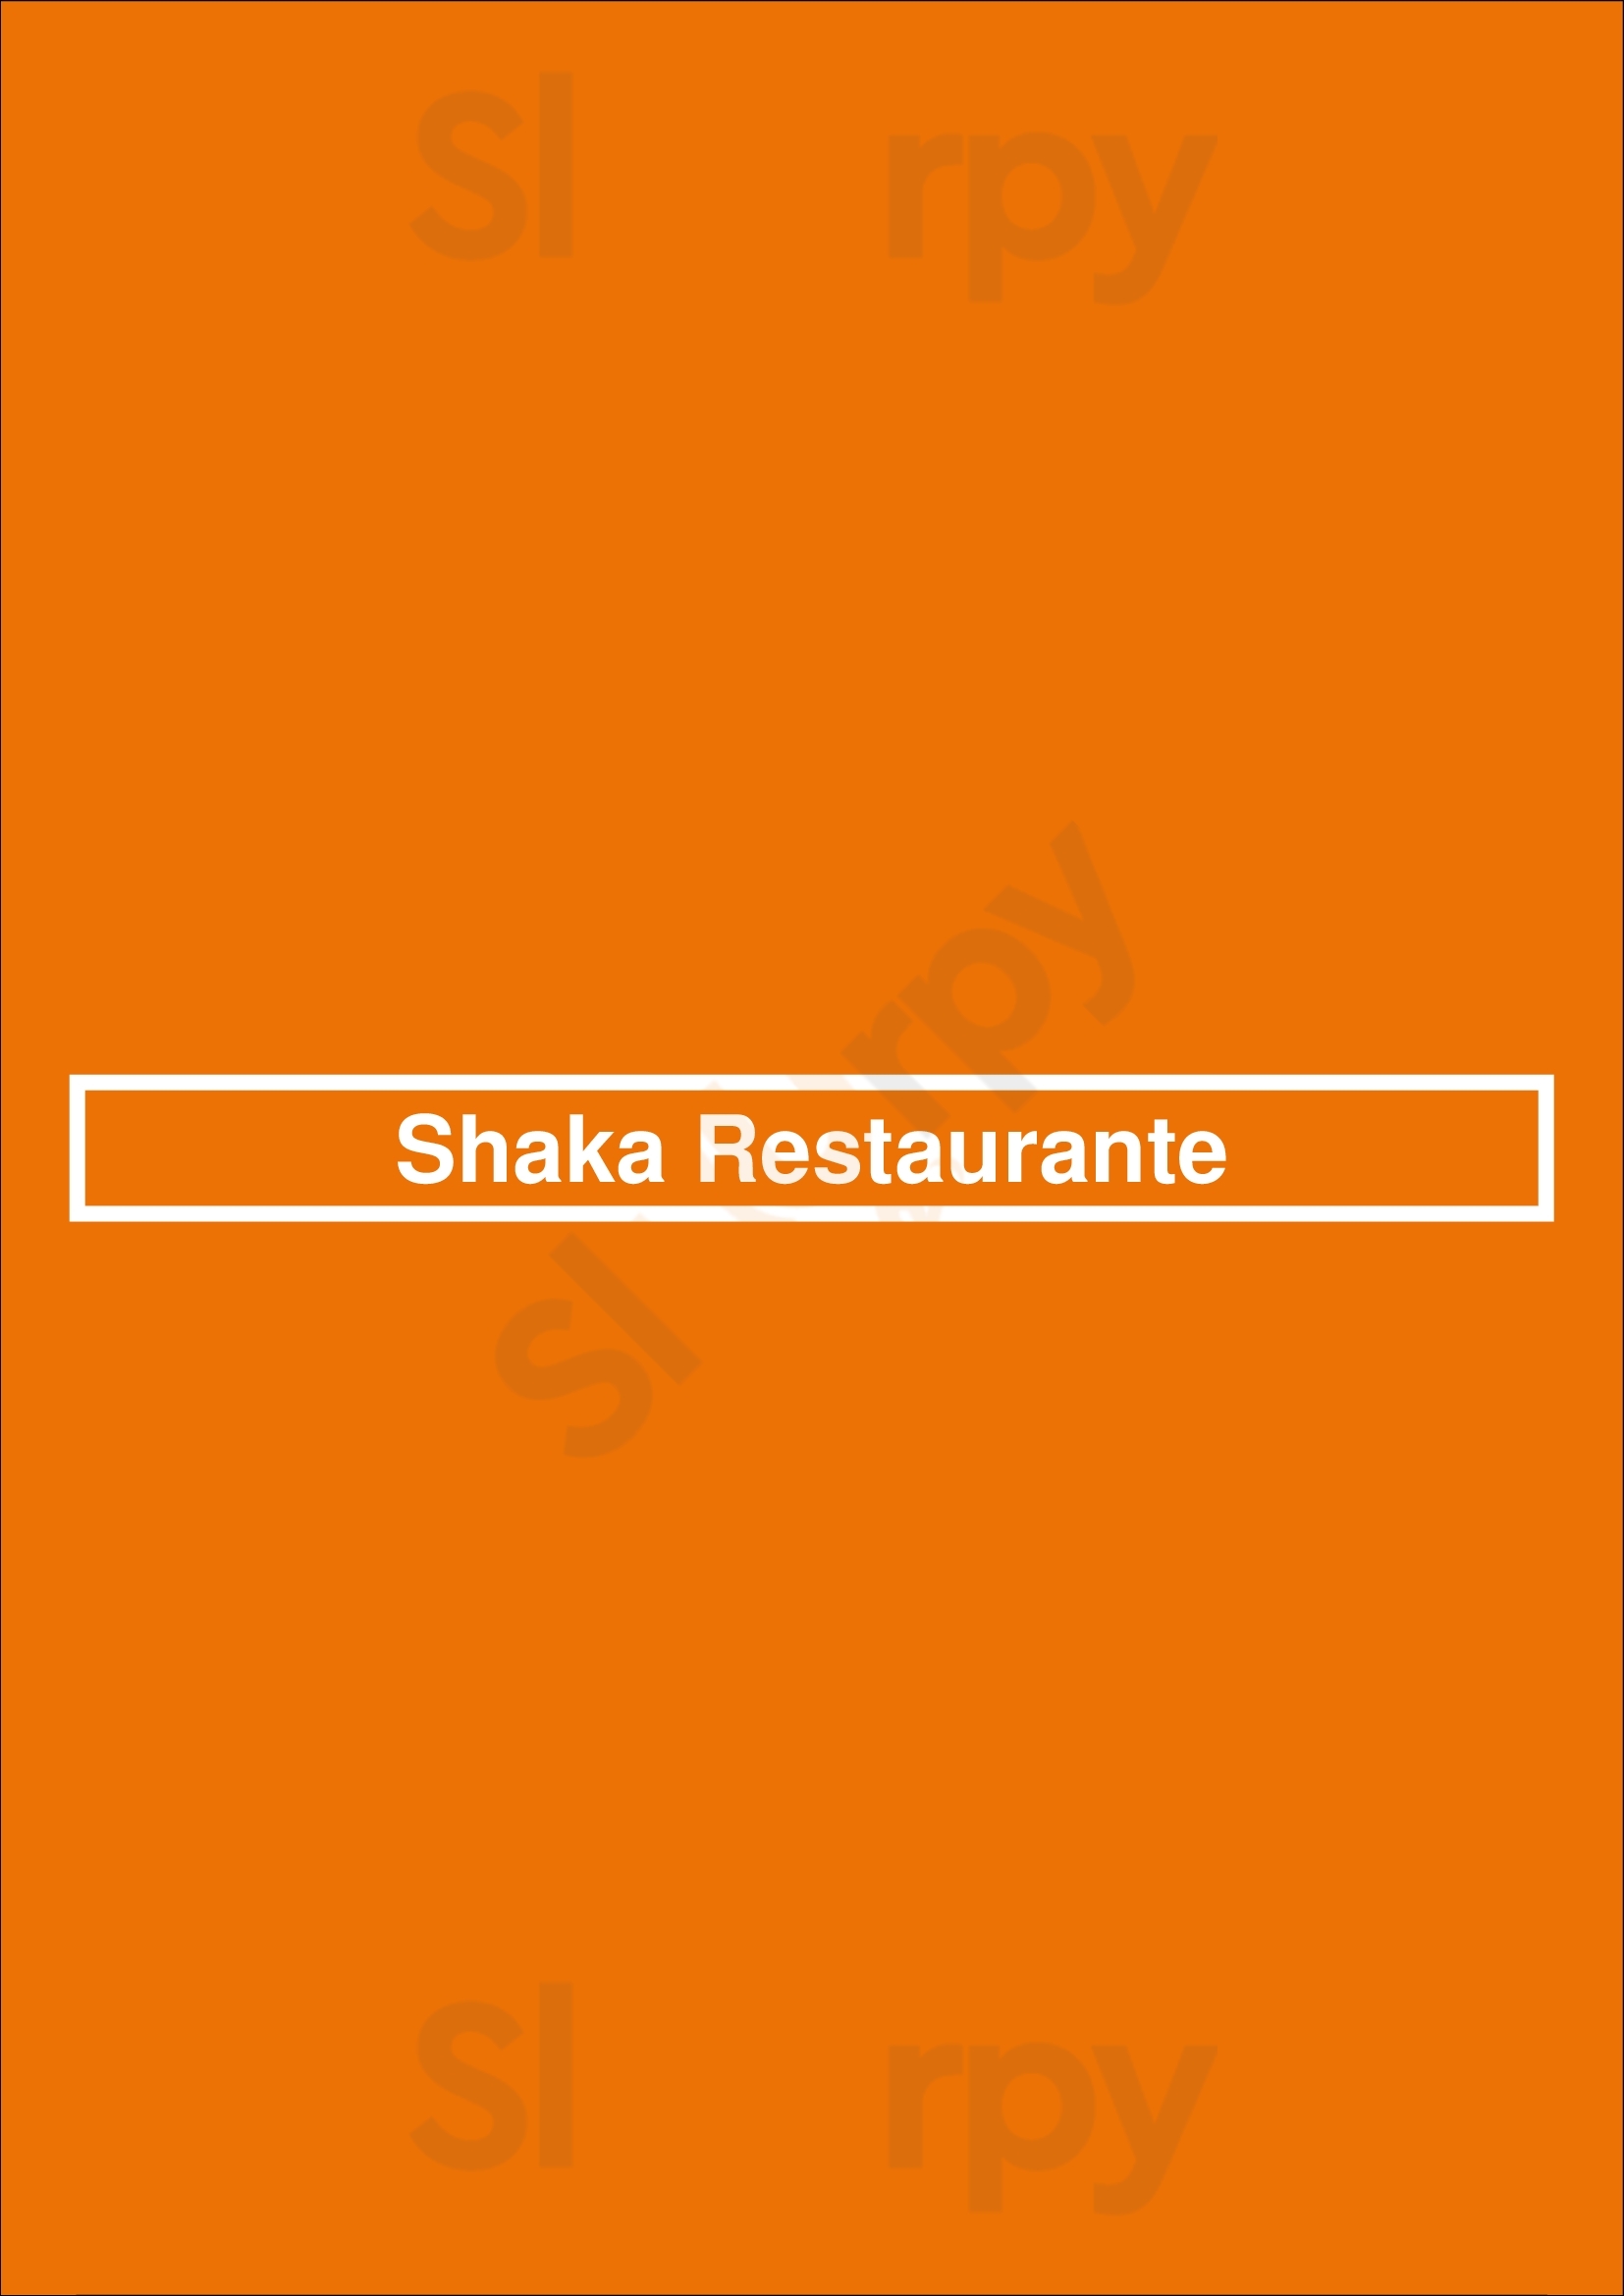 Shaka Restaurante Palma de Mallorca Menu - 1